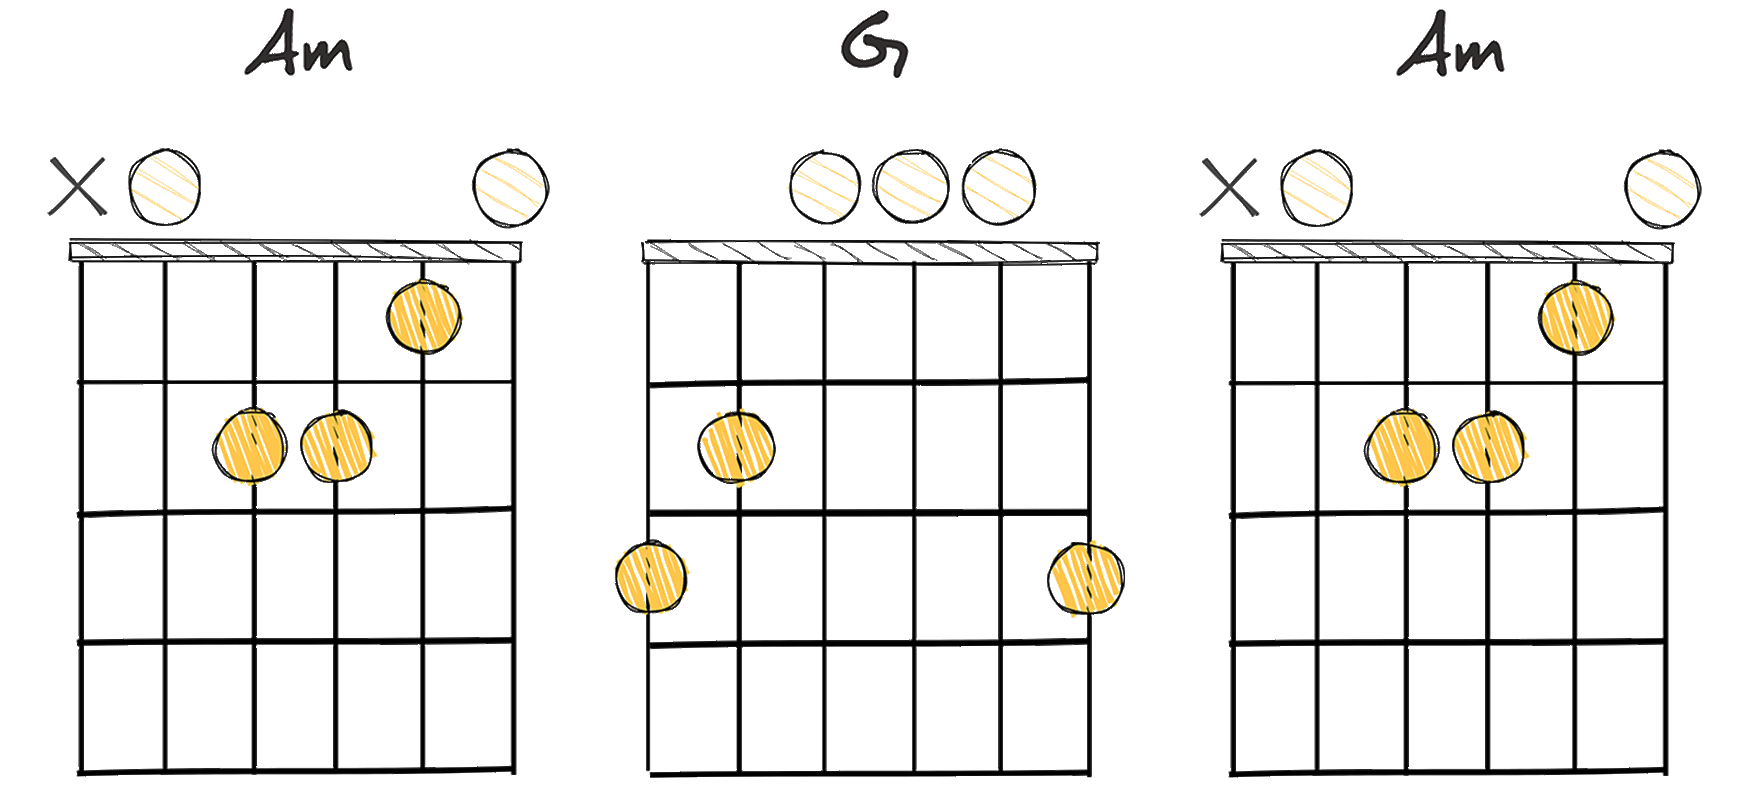 i - bVII - i (1 - flat7 - 1) chords diagram